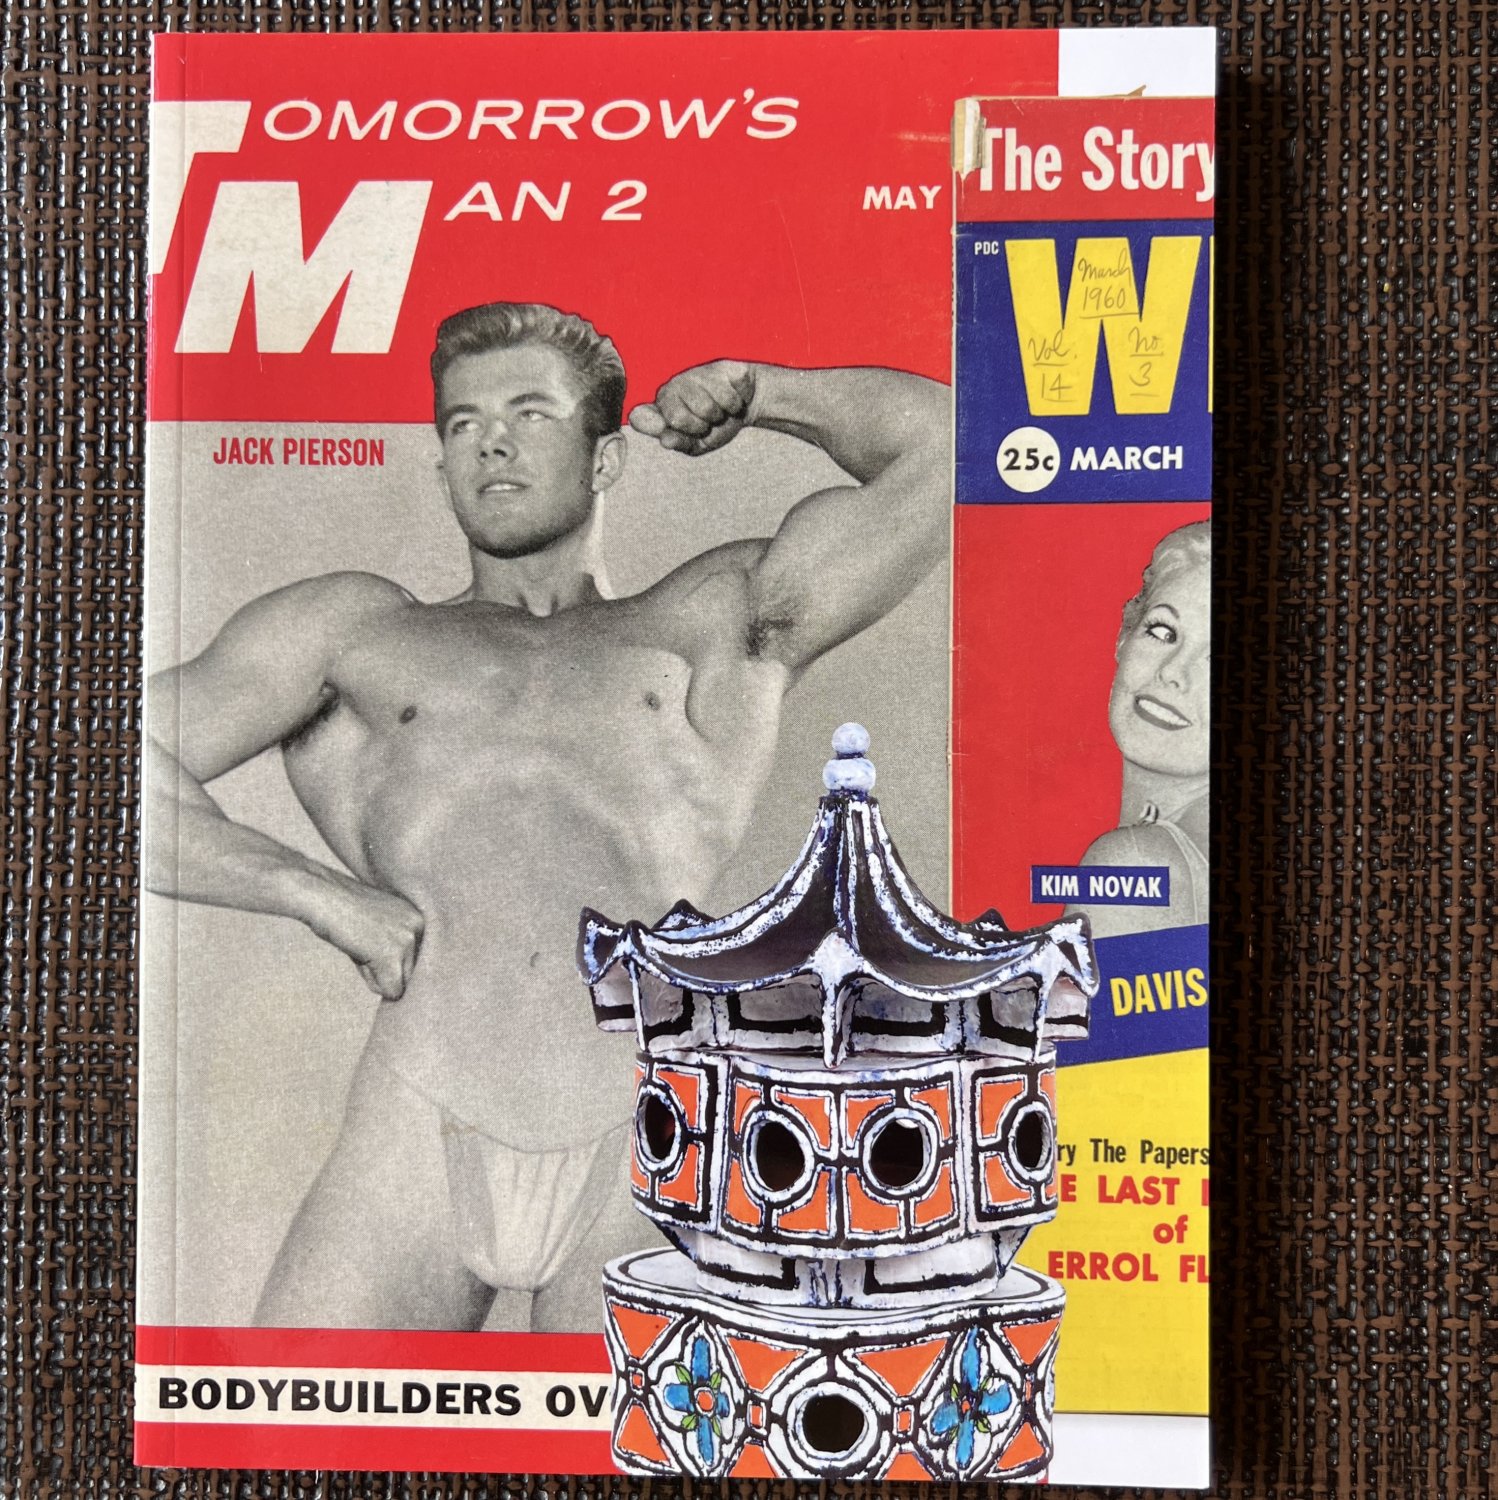 TOMORROW'S MAN 2 (2015) L.E. JACK PIERSON Gay Male NUDES Physique Beefcake Muscle Photos